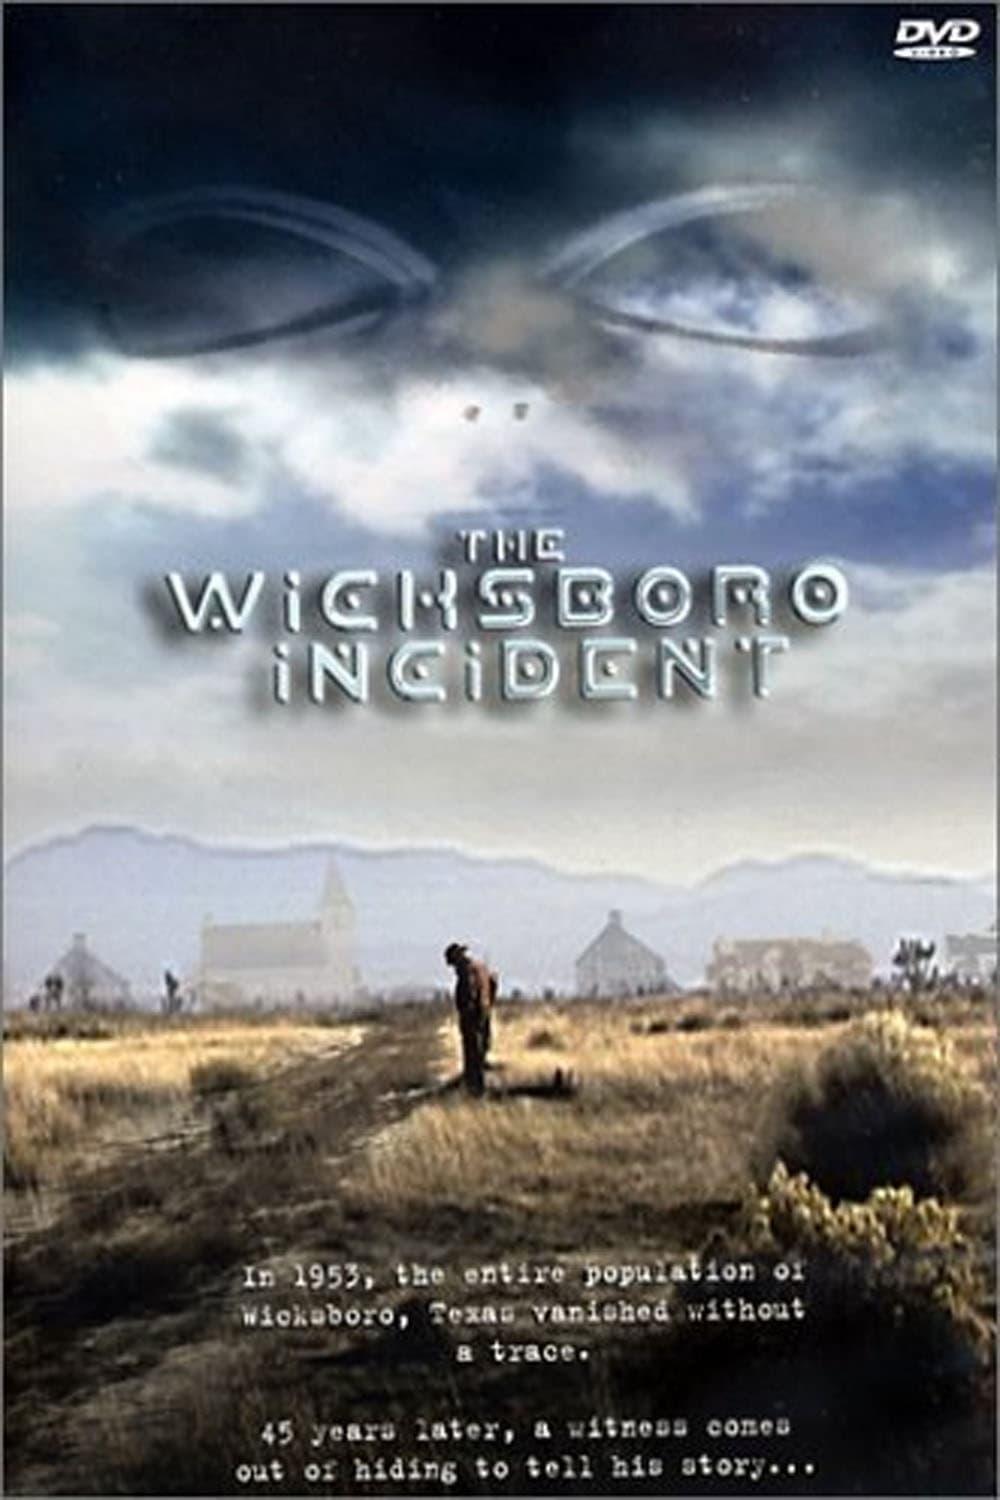 The Wicksboro Incident poster